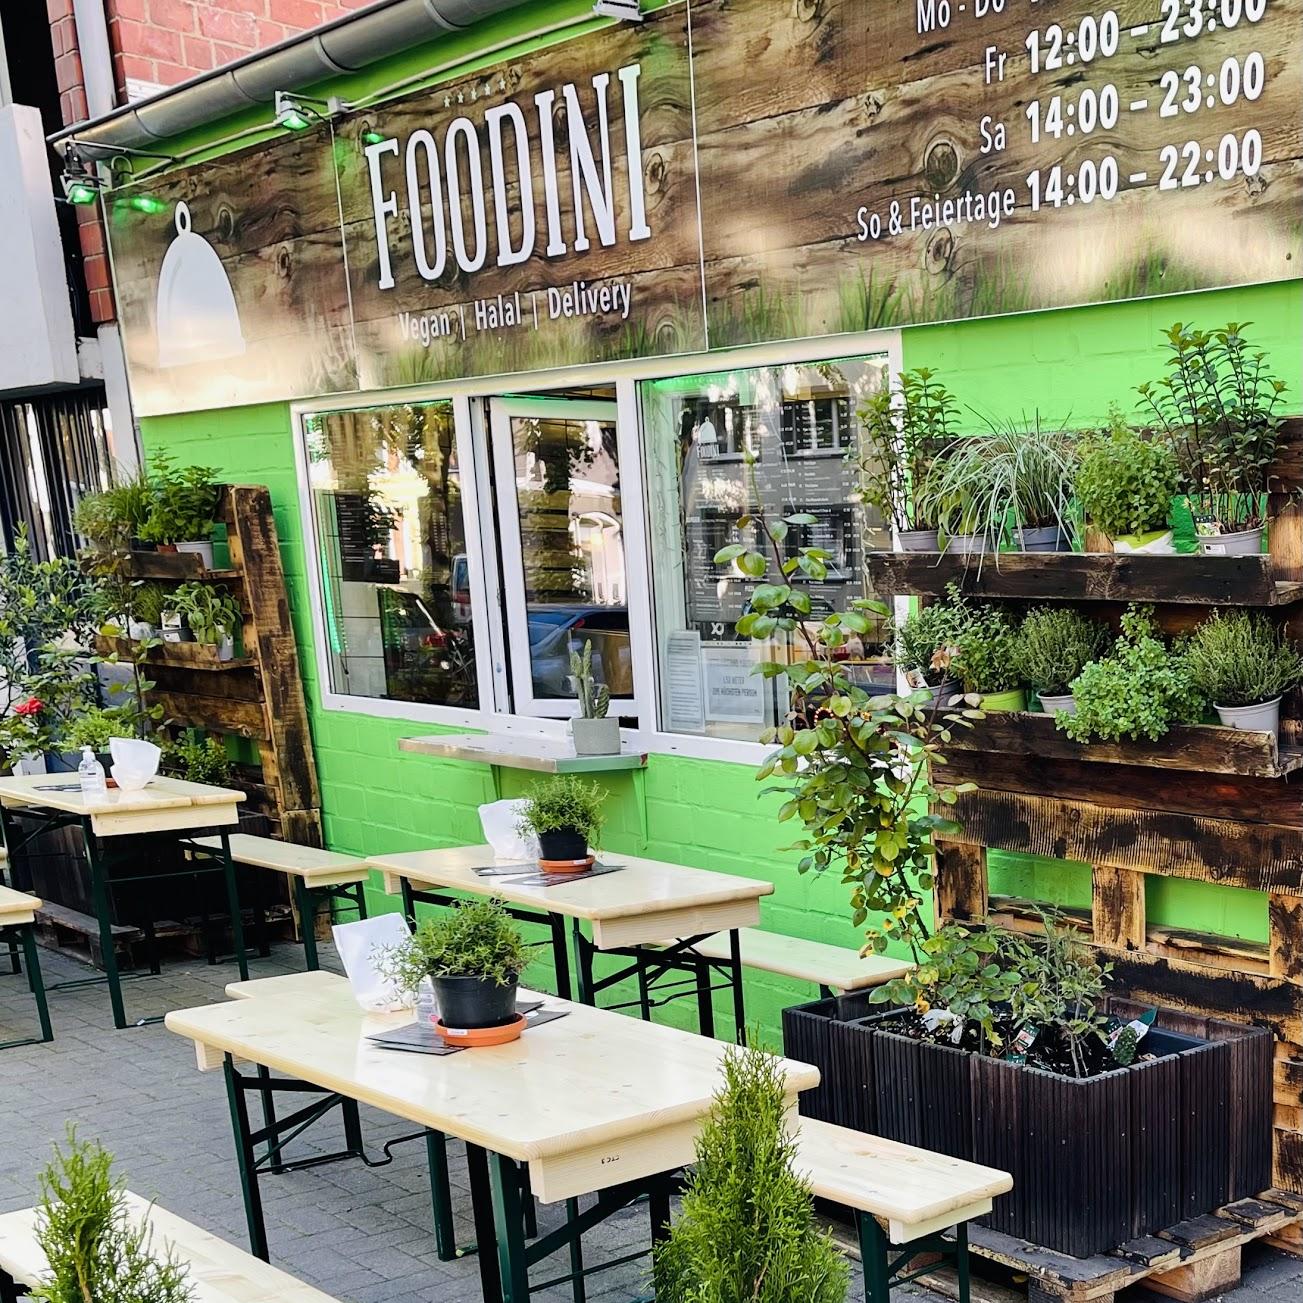 Restaurant "Foodini Cologne" in Köln